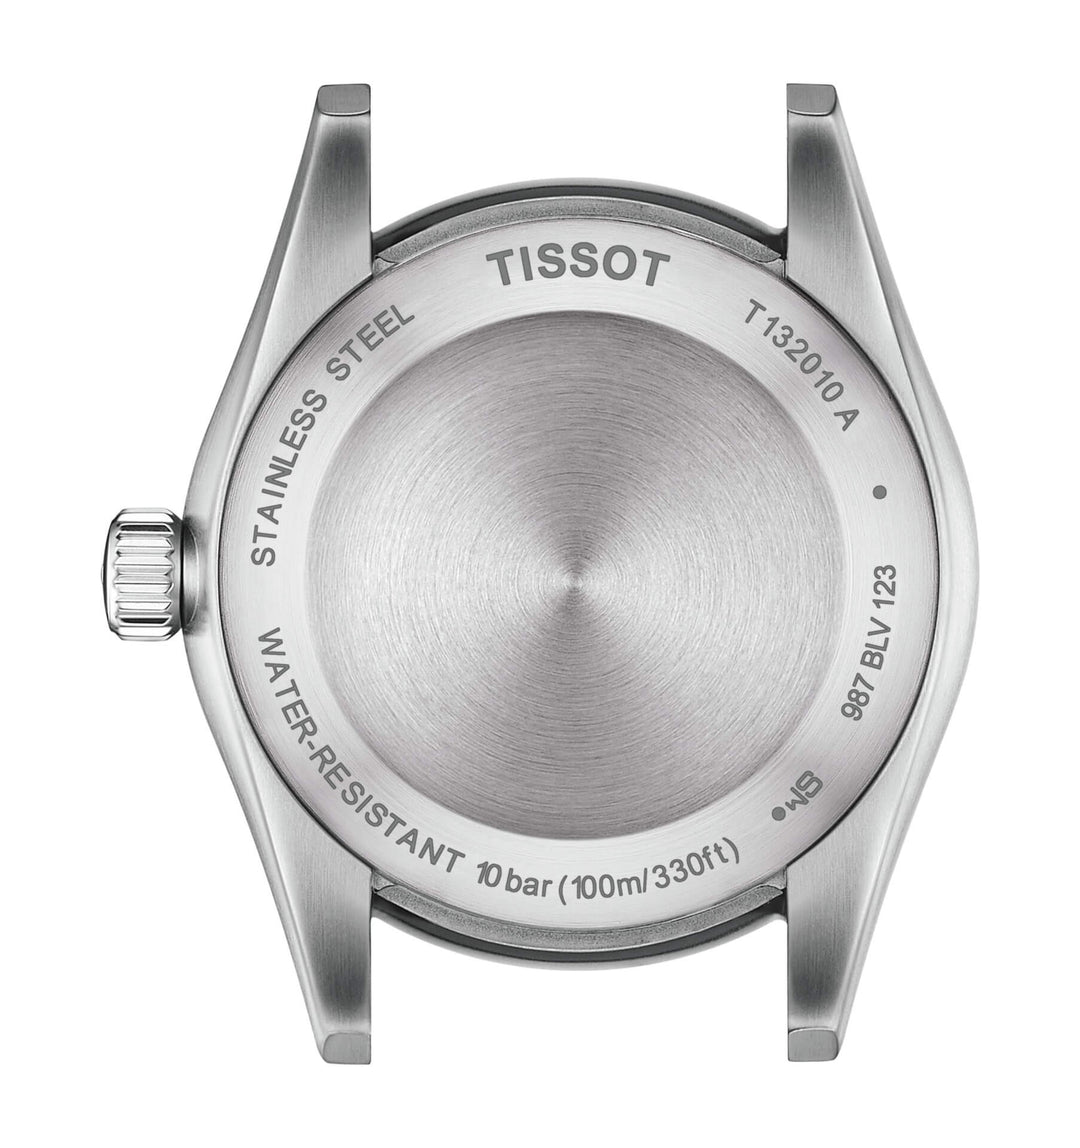 Tissot-My-Lady3-scaled-1.jpg